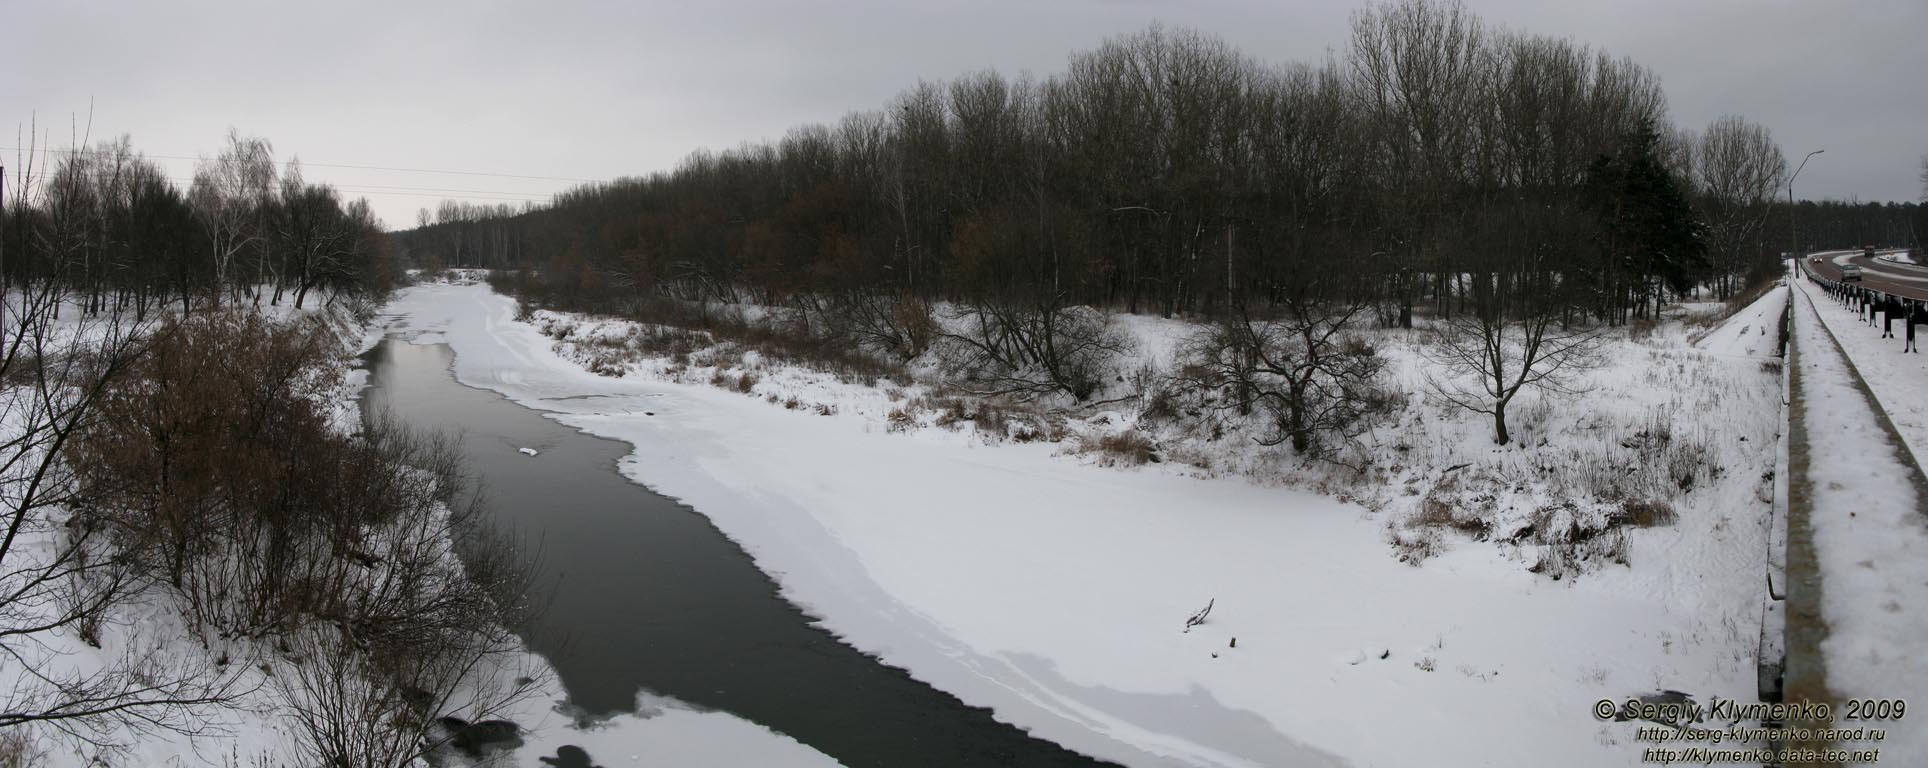 Житомирщина. Фото. Речка Тетерев зимой (в районе города Коростишев, 50°20'28"N, 29°04'40"E).